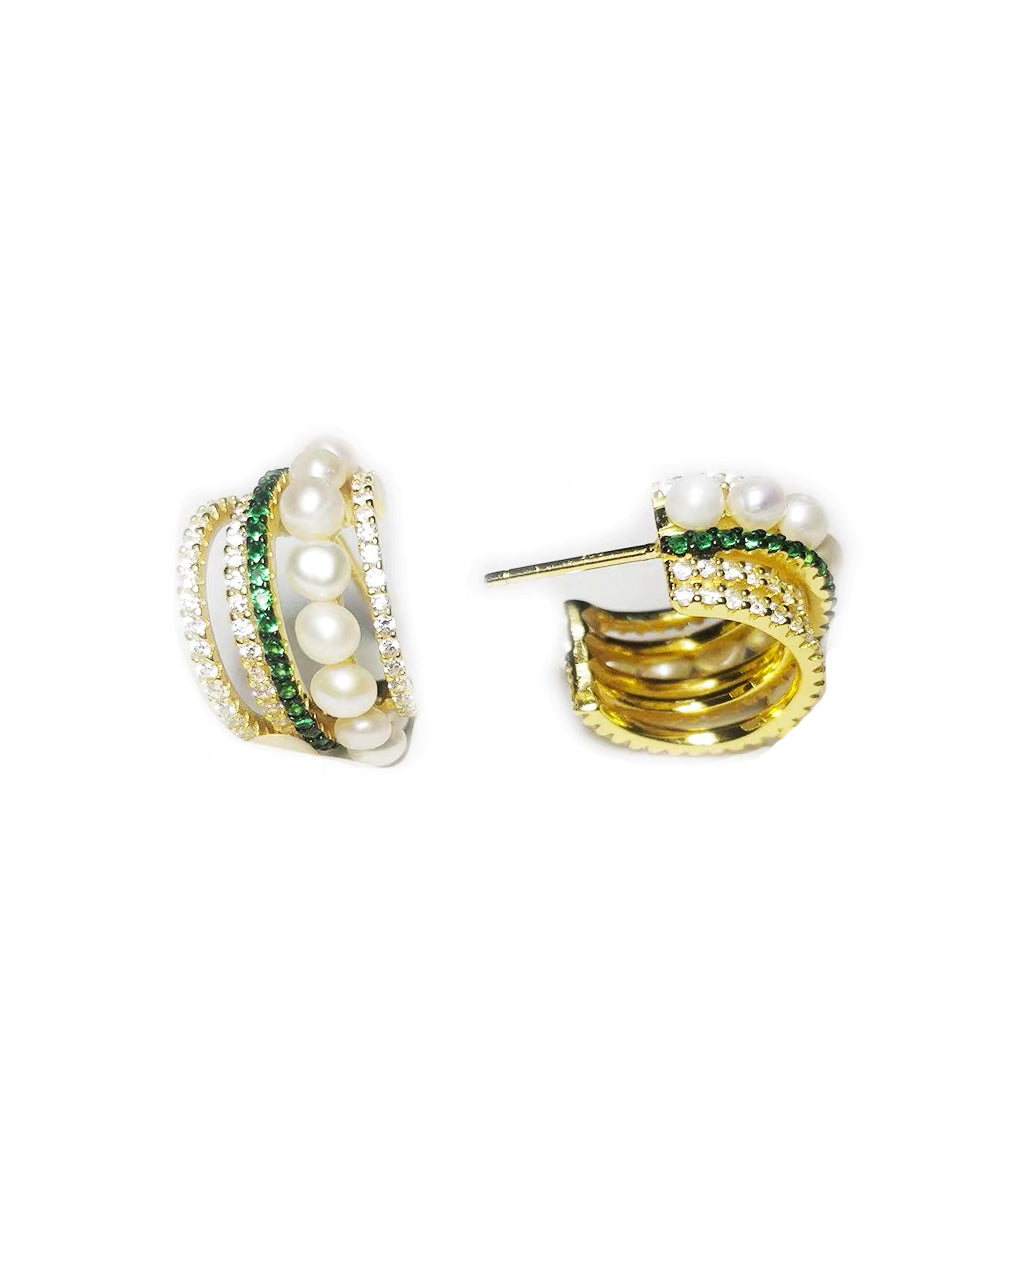 gold with diamonds & pearls hoops earrings *pre-order*